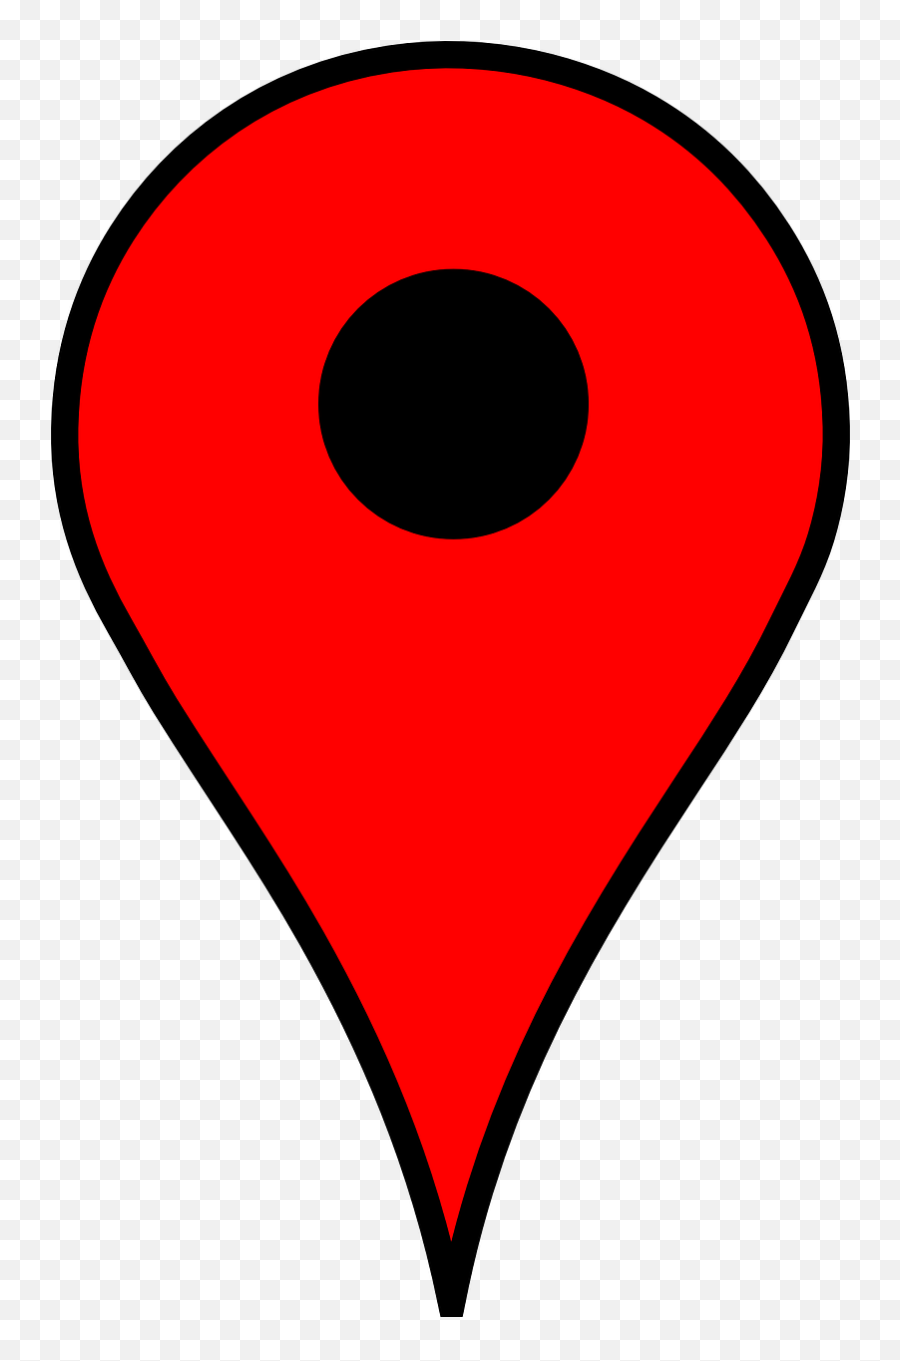 Google Maps Pin Png - Oradea Fortress,Google Map Pin Png